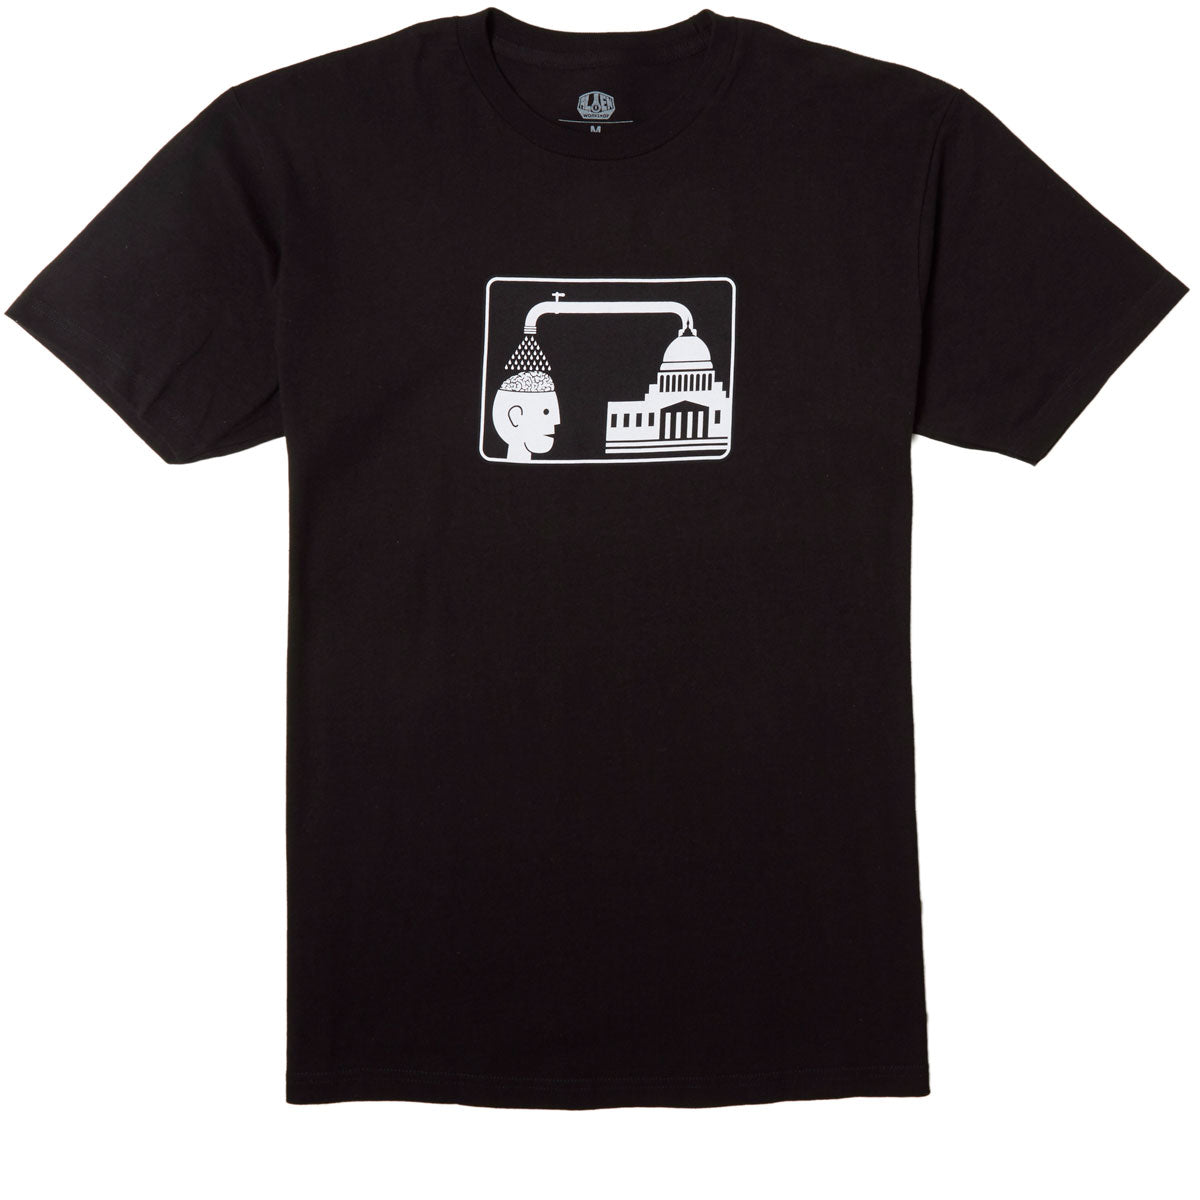 Alien Workshop Brainwash T-Shirt - Black image 1